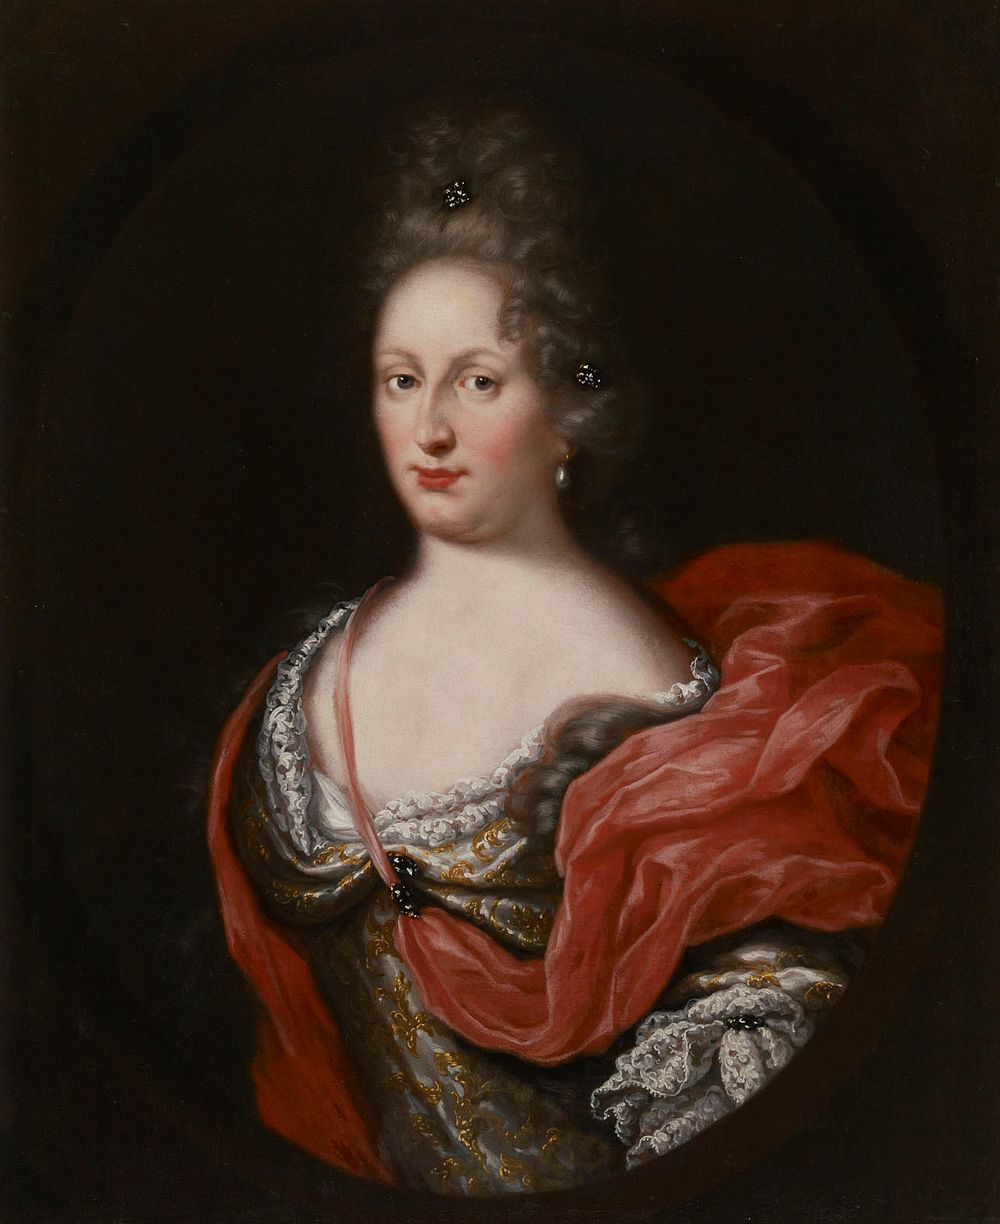 Countess ingeborg posse, 1668 - 1736